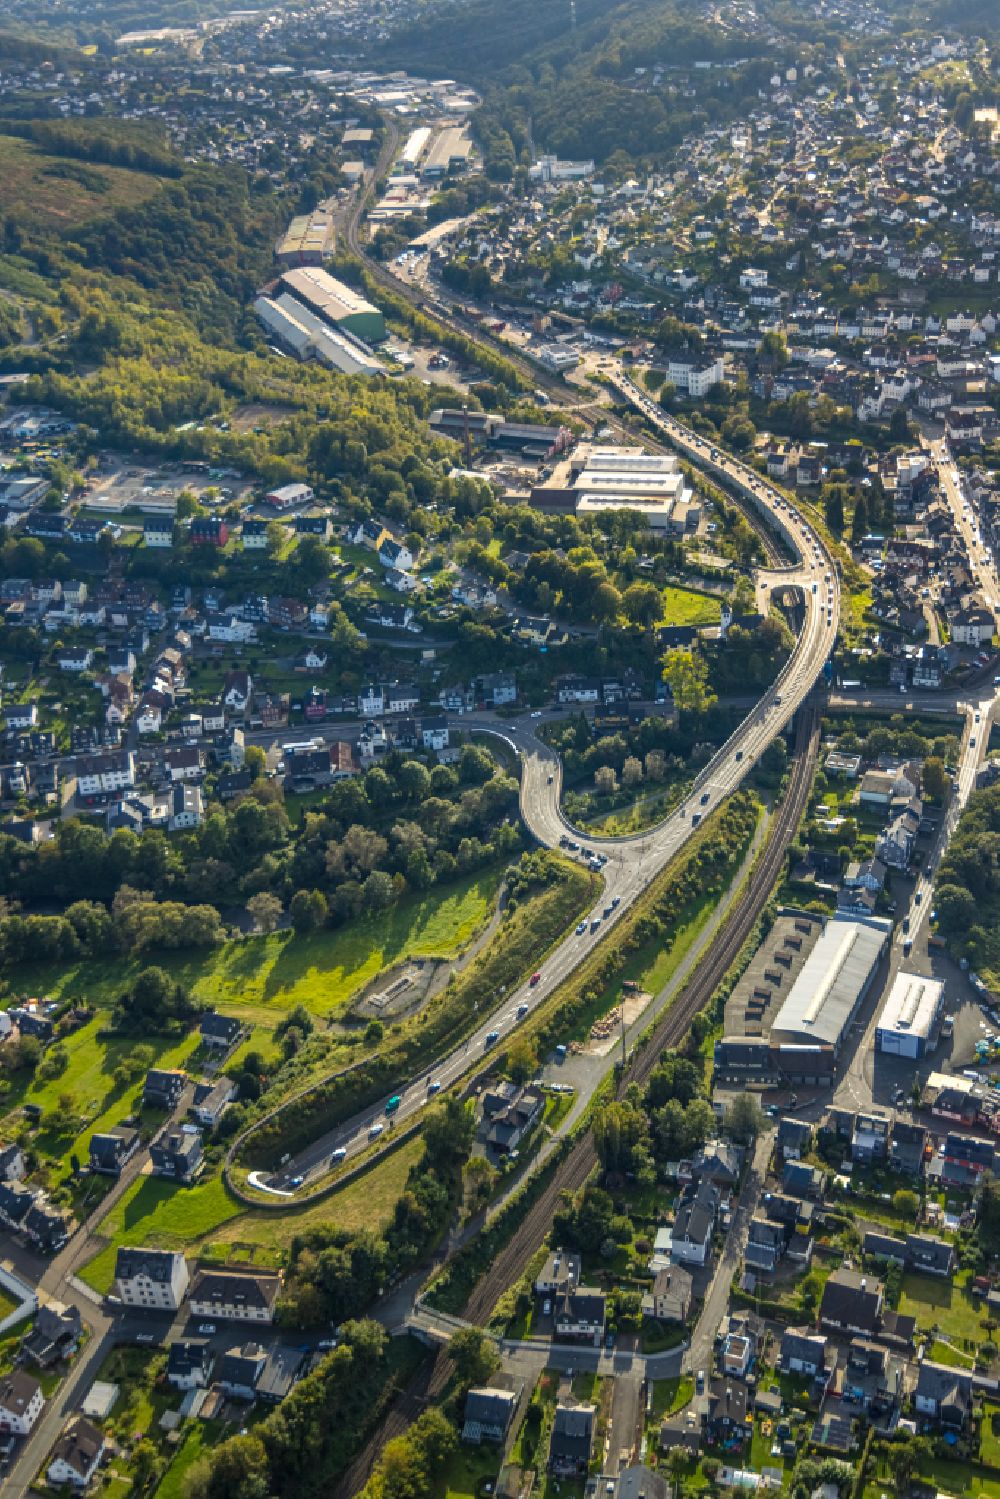 Niederschelden from above - Viaduct of the expressway B62 in Niederschelden in the state Rhineland-Palatinate